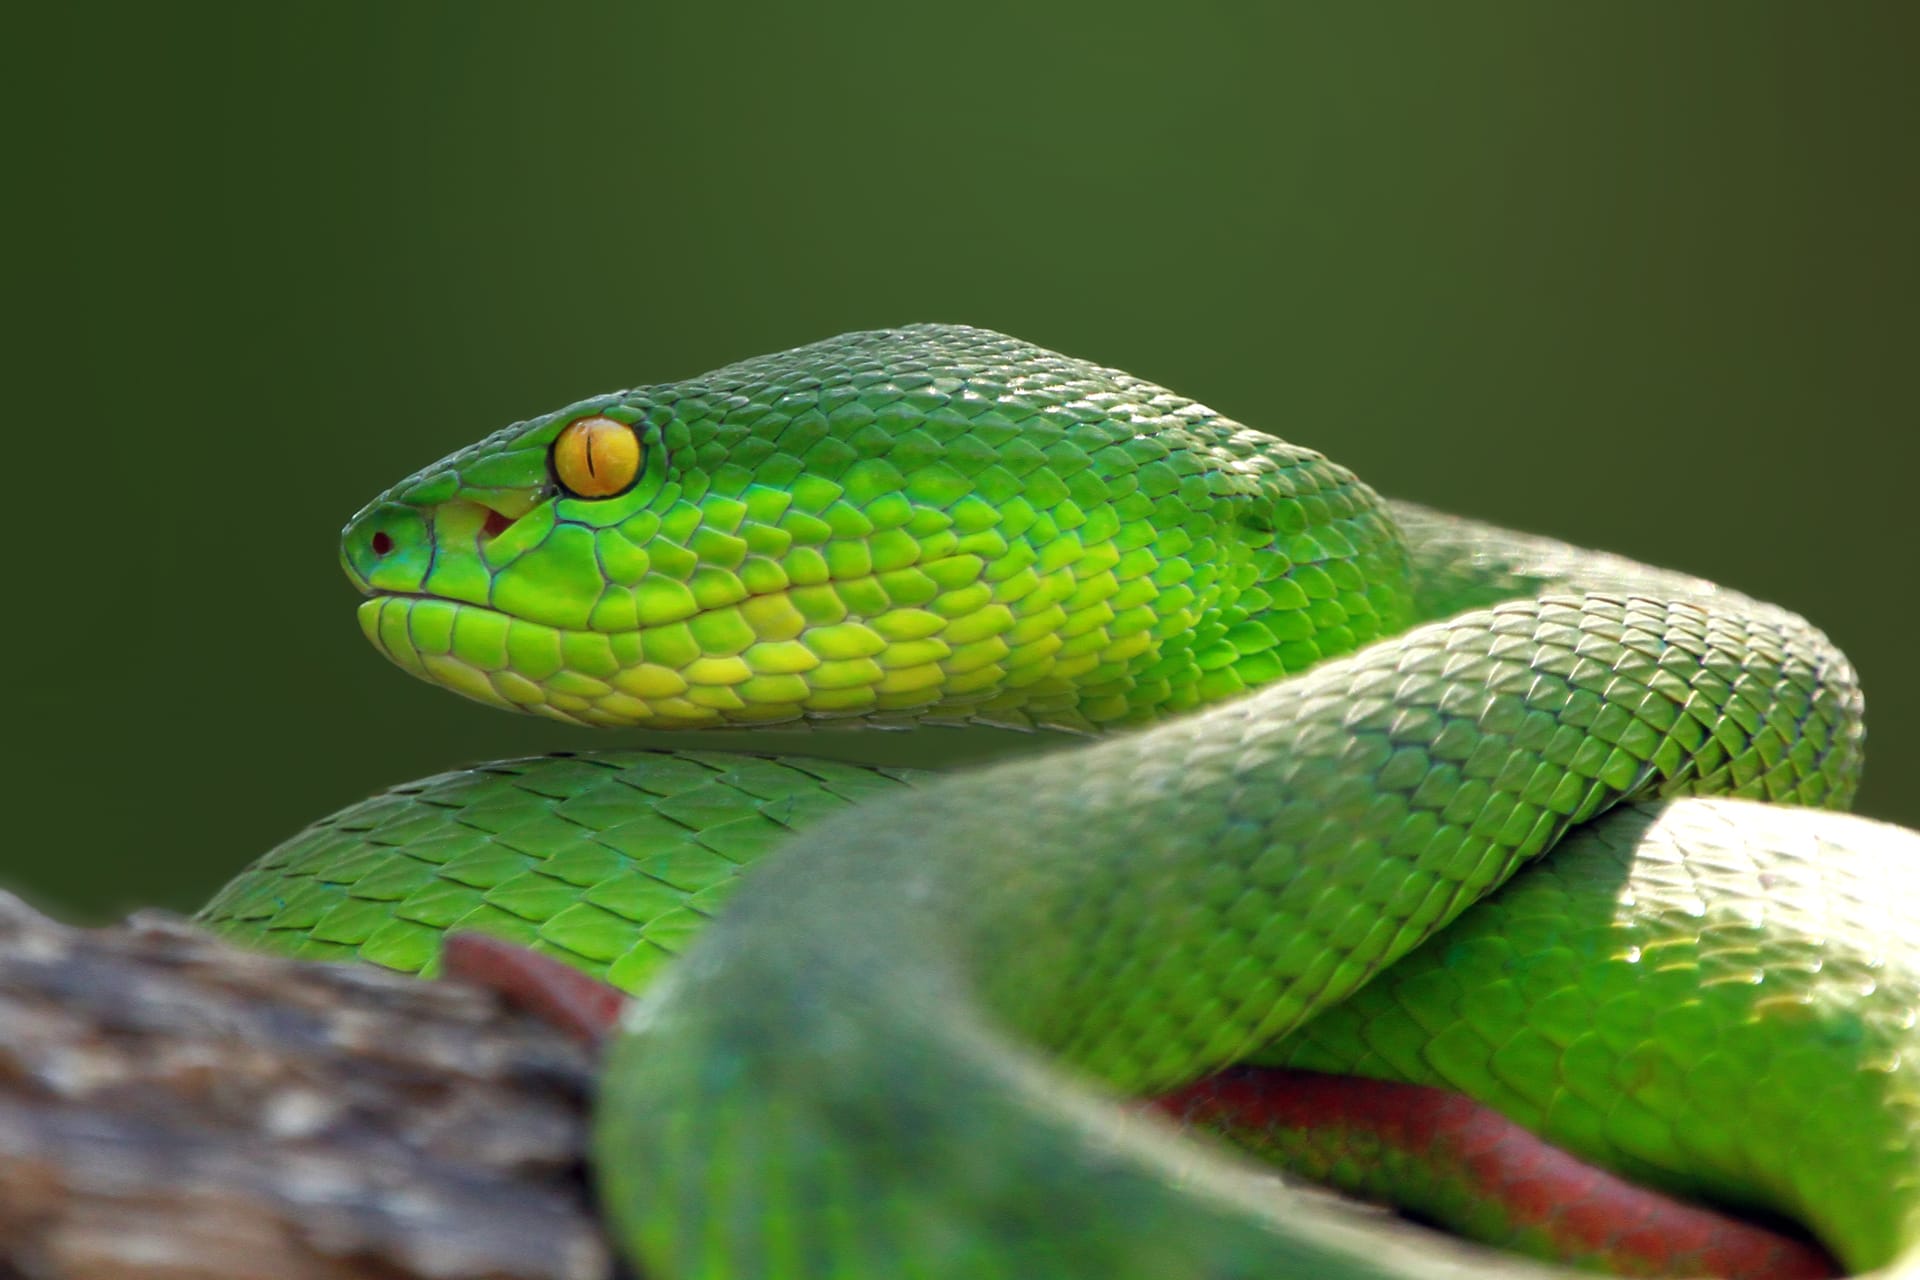 Trimisurus albolabris green snake closeup branch animal closeup